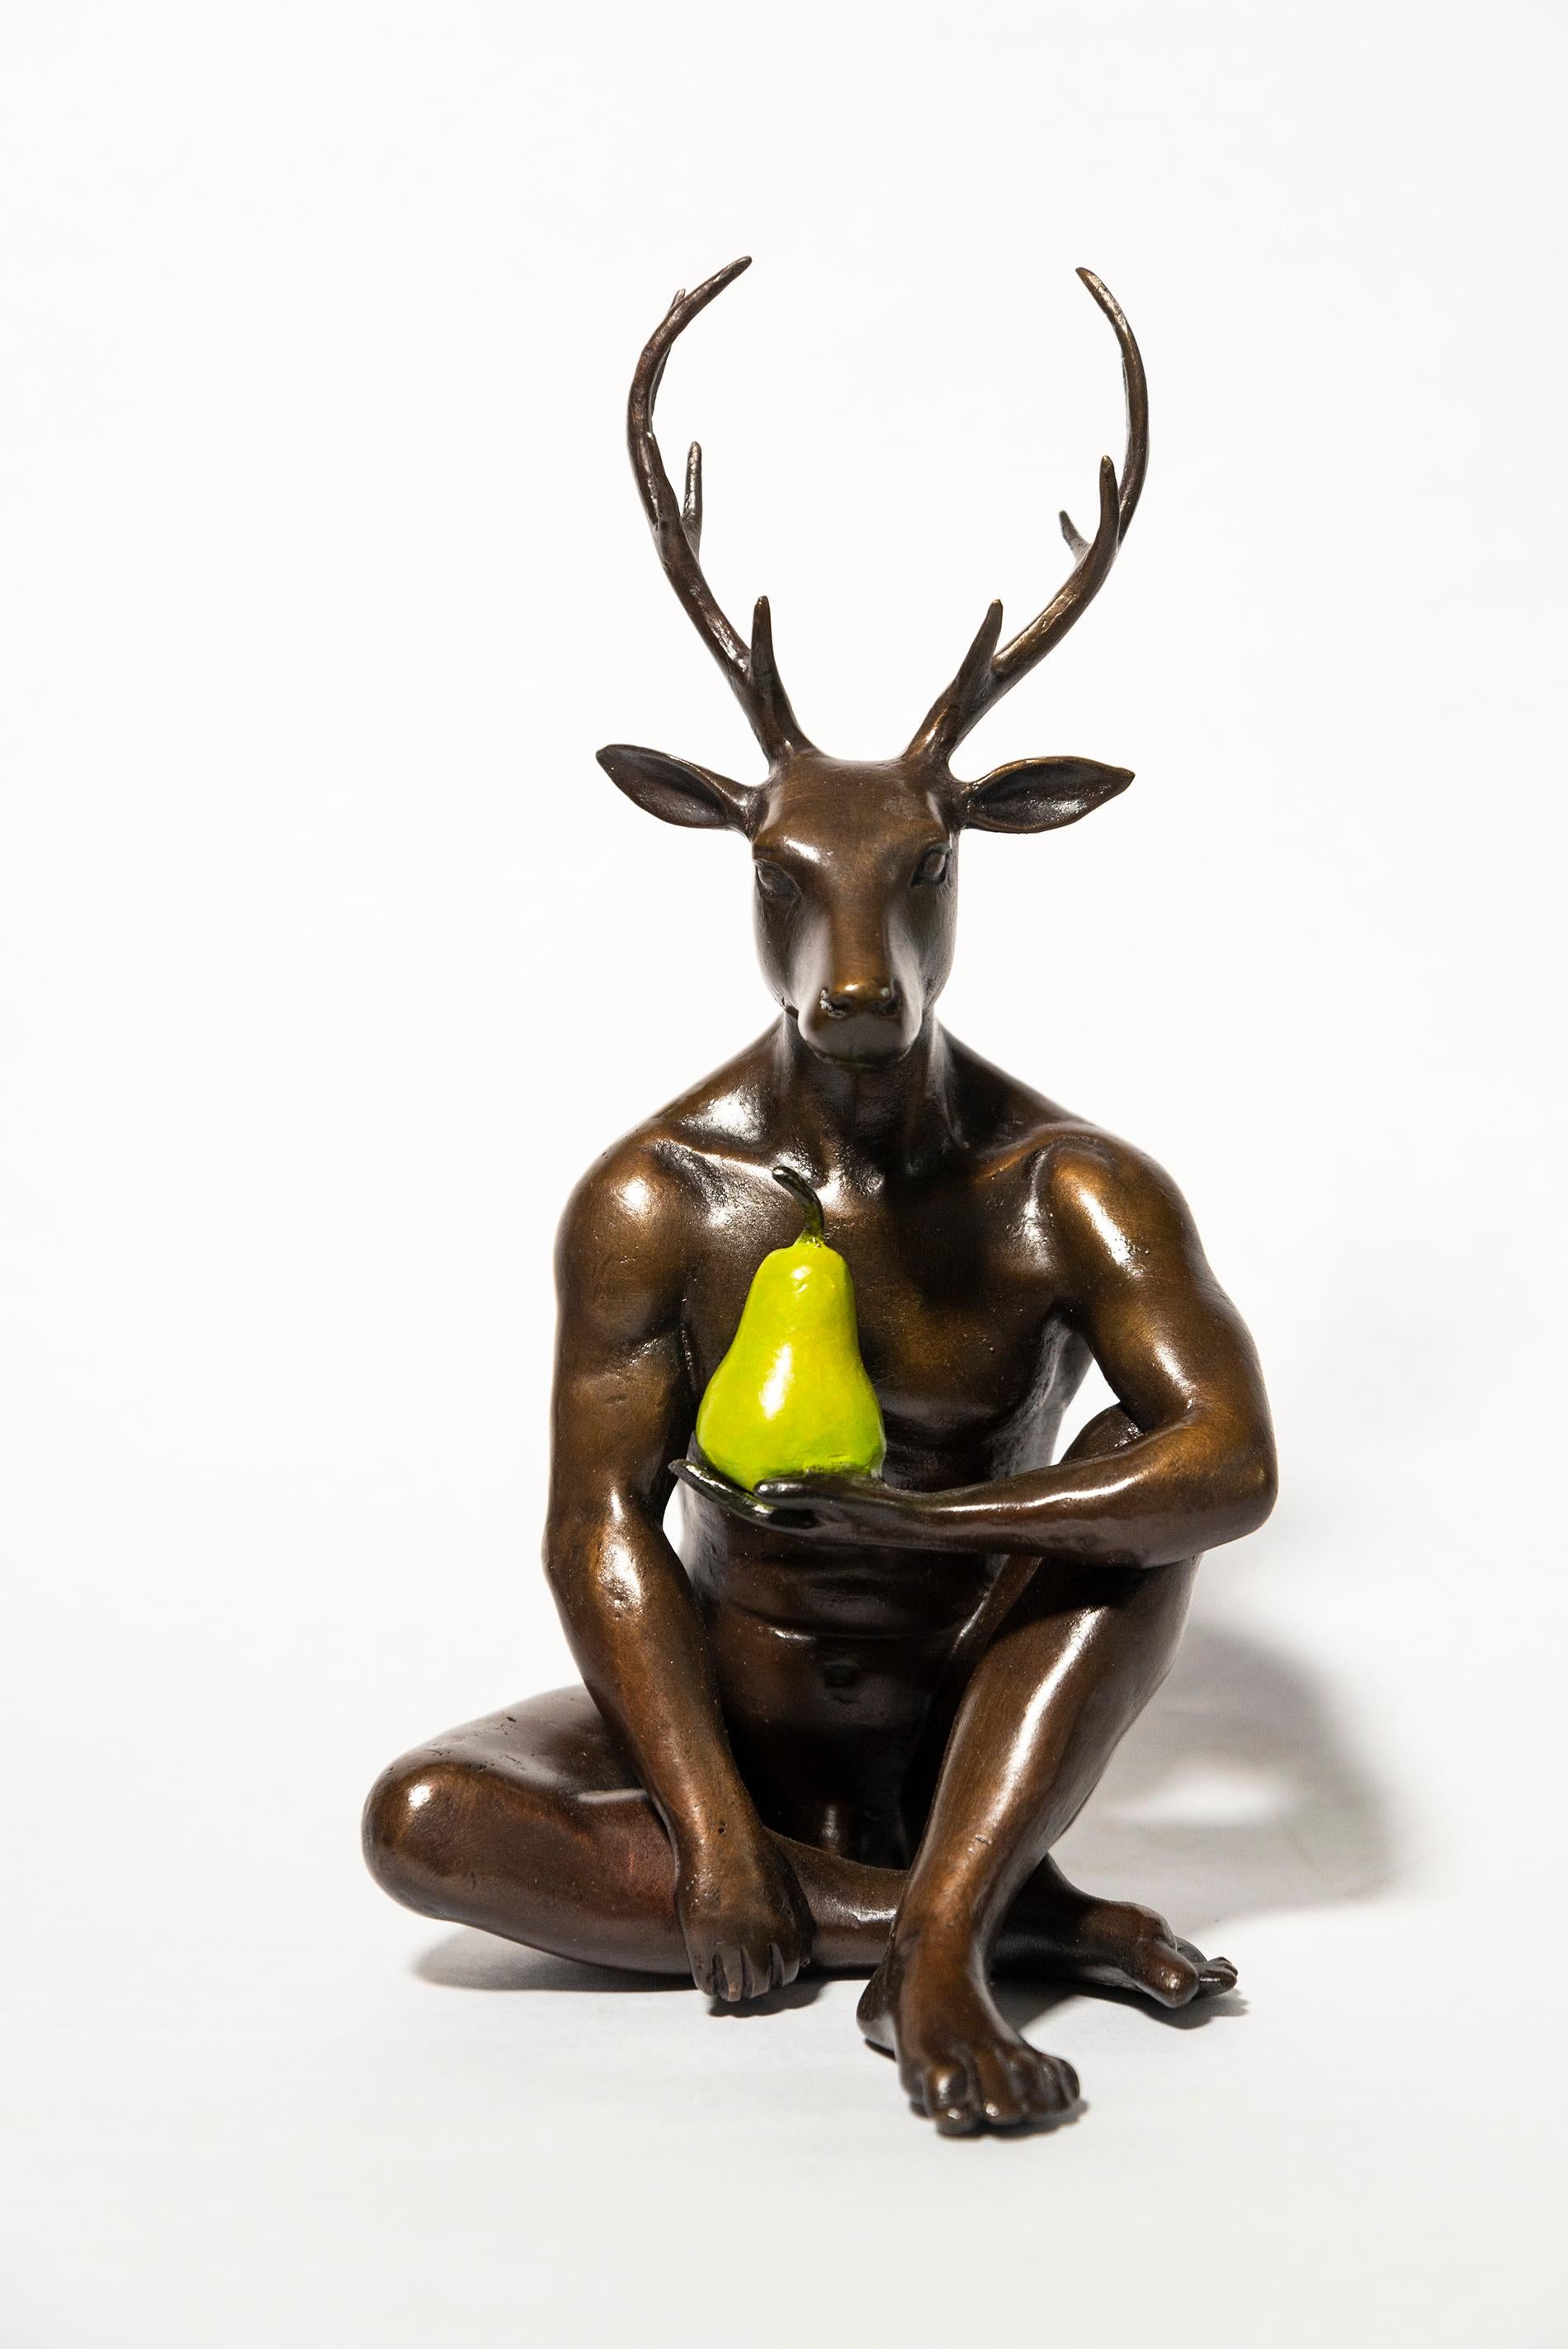 Gillie and Marc Schattner Figurative Sculpture - Deerman grew a pear 19/25 - figurative, playful, contemporary, bronze sculpture